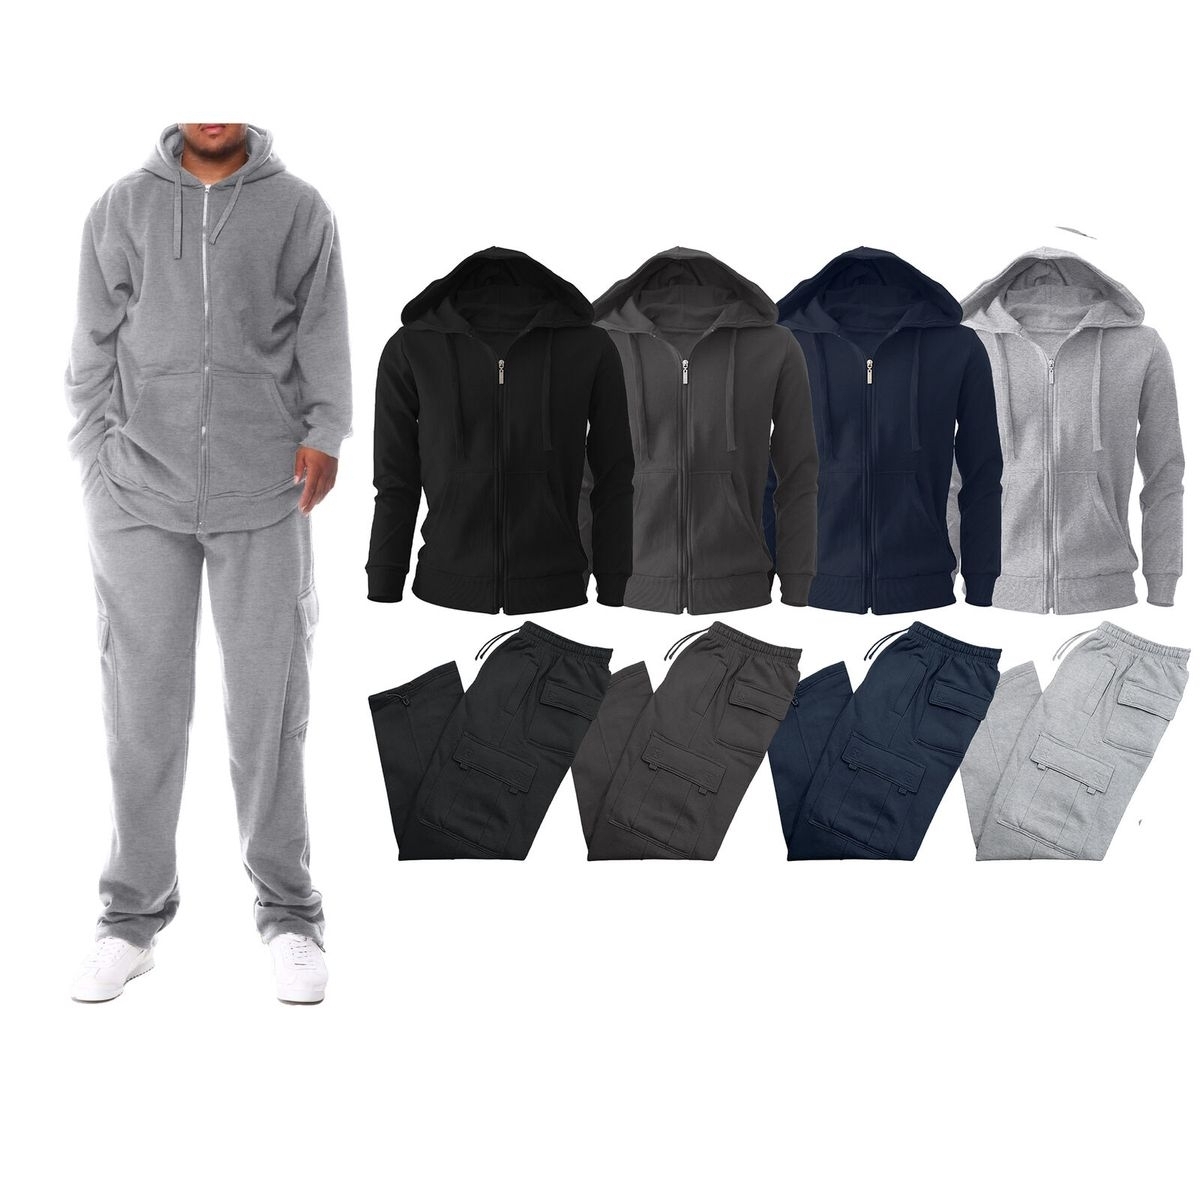 Men's Big & Tall Winter Warm Athletic Active Cozy Fleece Lined Multi-Pocket Full Zip Up Cargo Tracksuit - Black, Medium